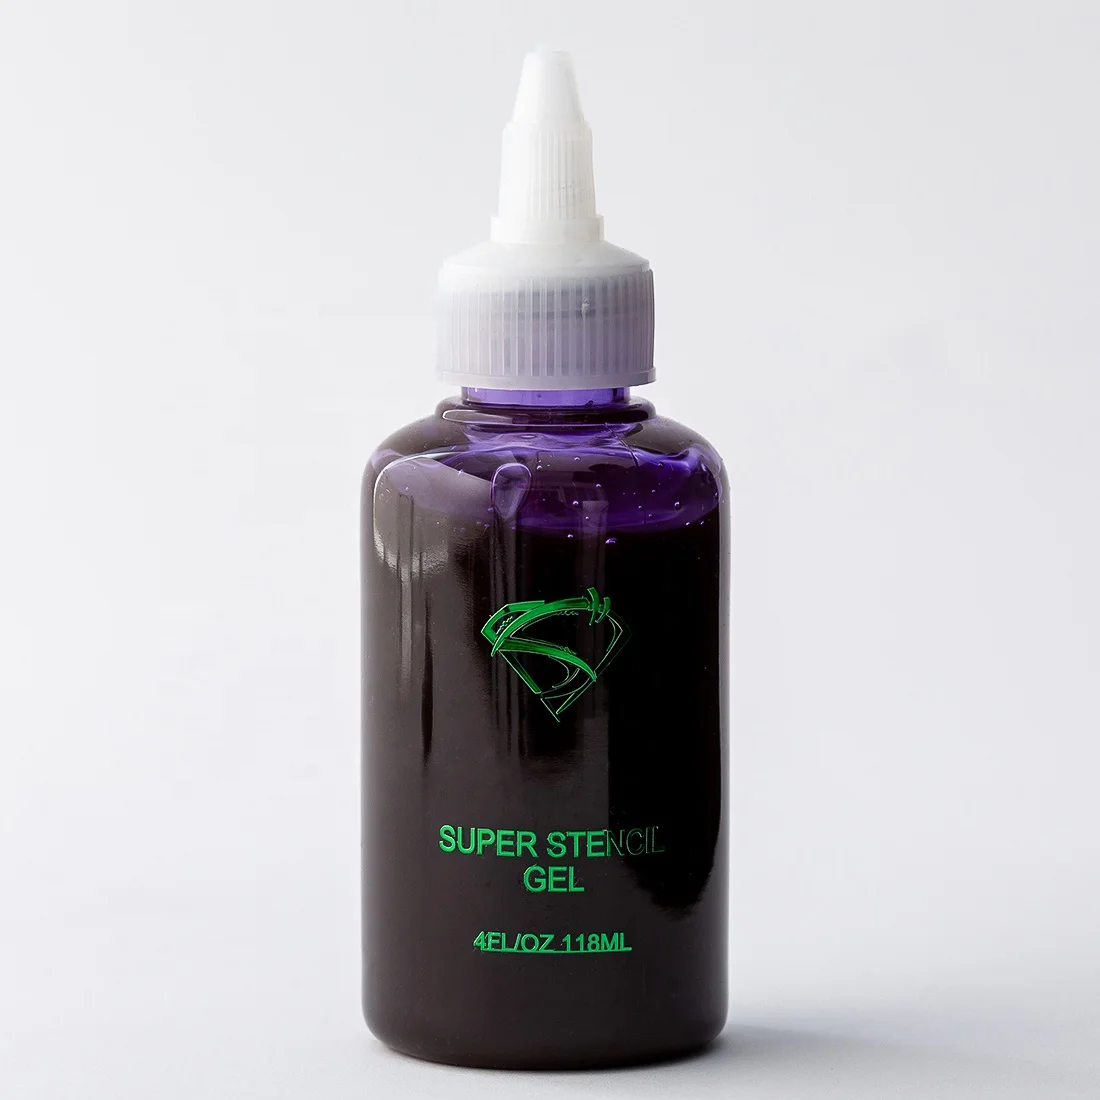 Stencil Stuff Tattoo Transfer Gel Fluid Liquid Cream VEGAN 250ml Bottle AU  STOCK